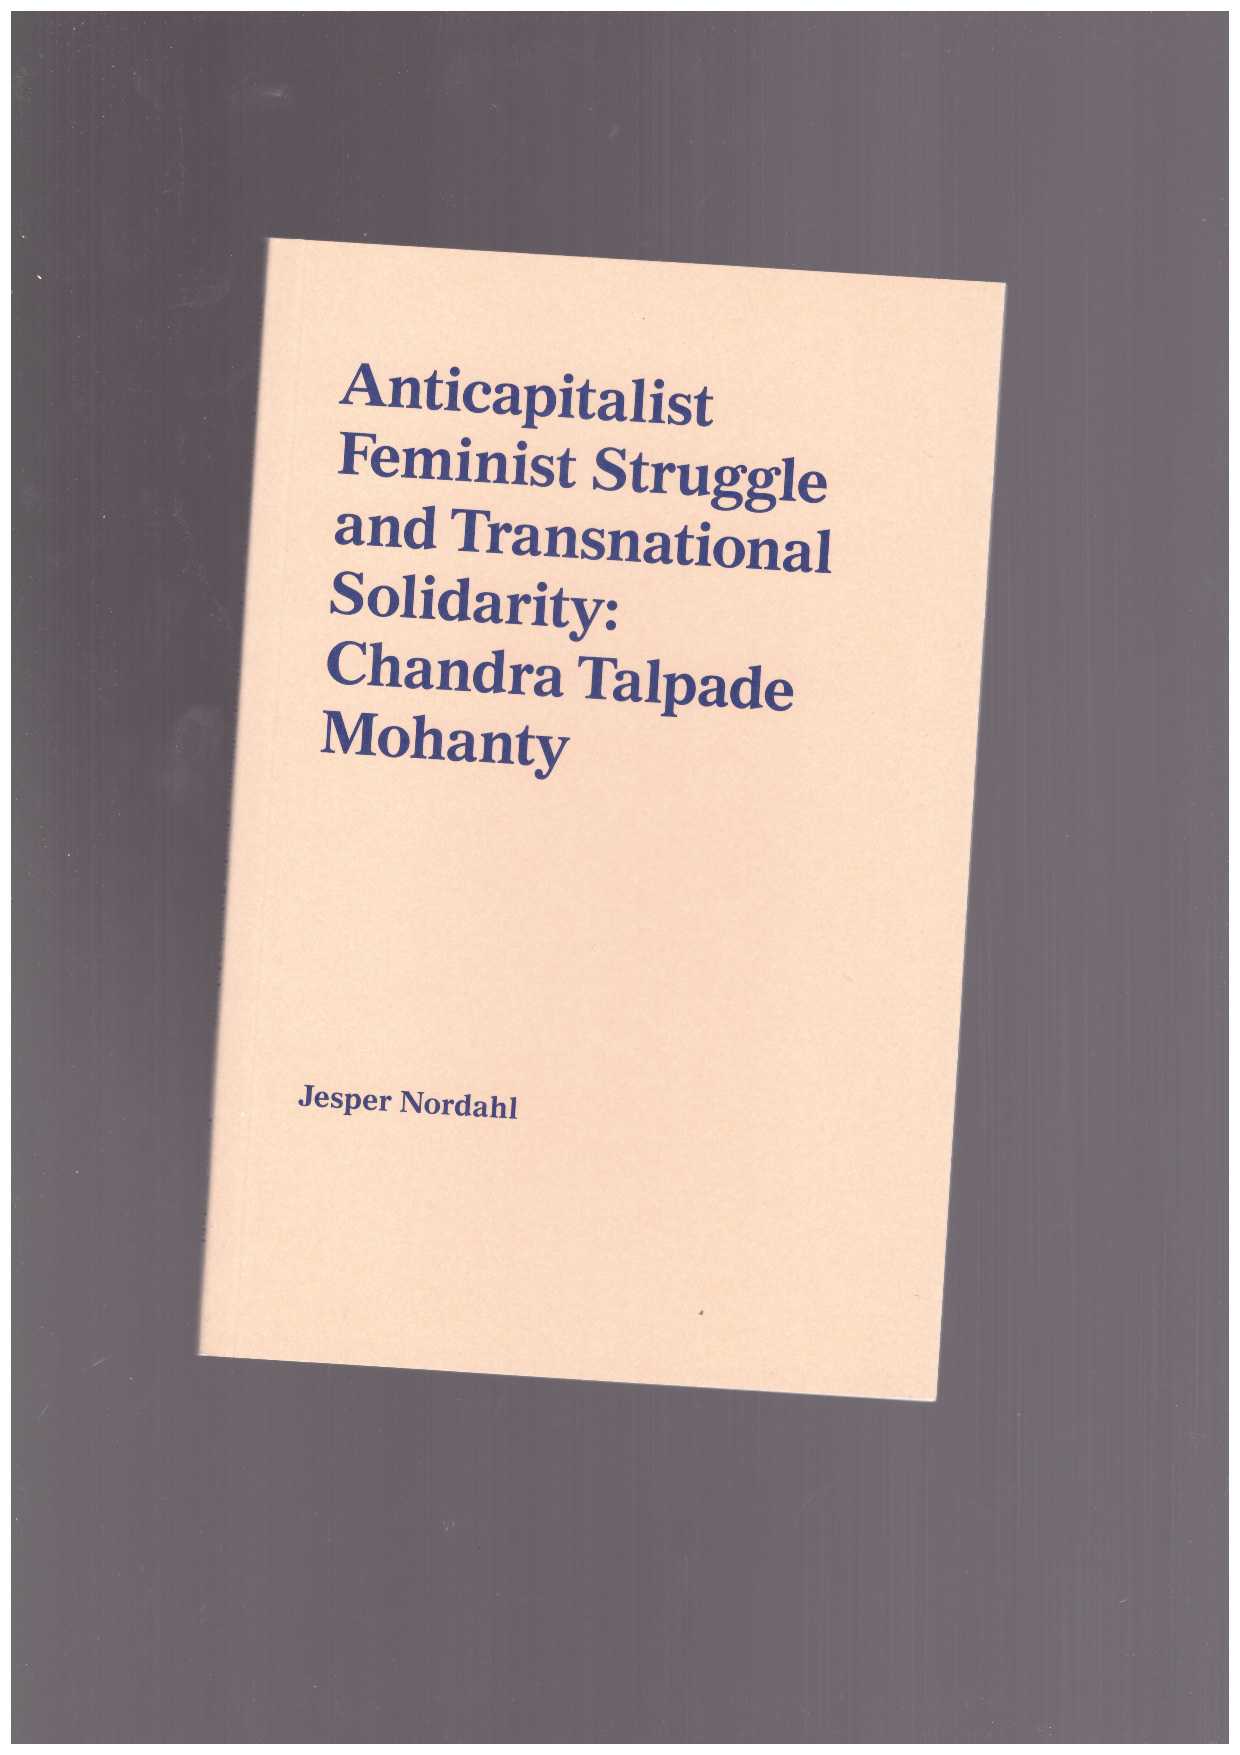 NORDAHL, Jesper - Anticapitalist Feminist Struggle and Transnational Solidarity: Chandra Talpade Mohanty